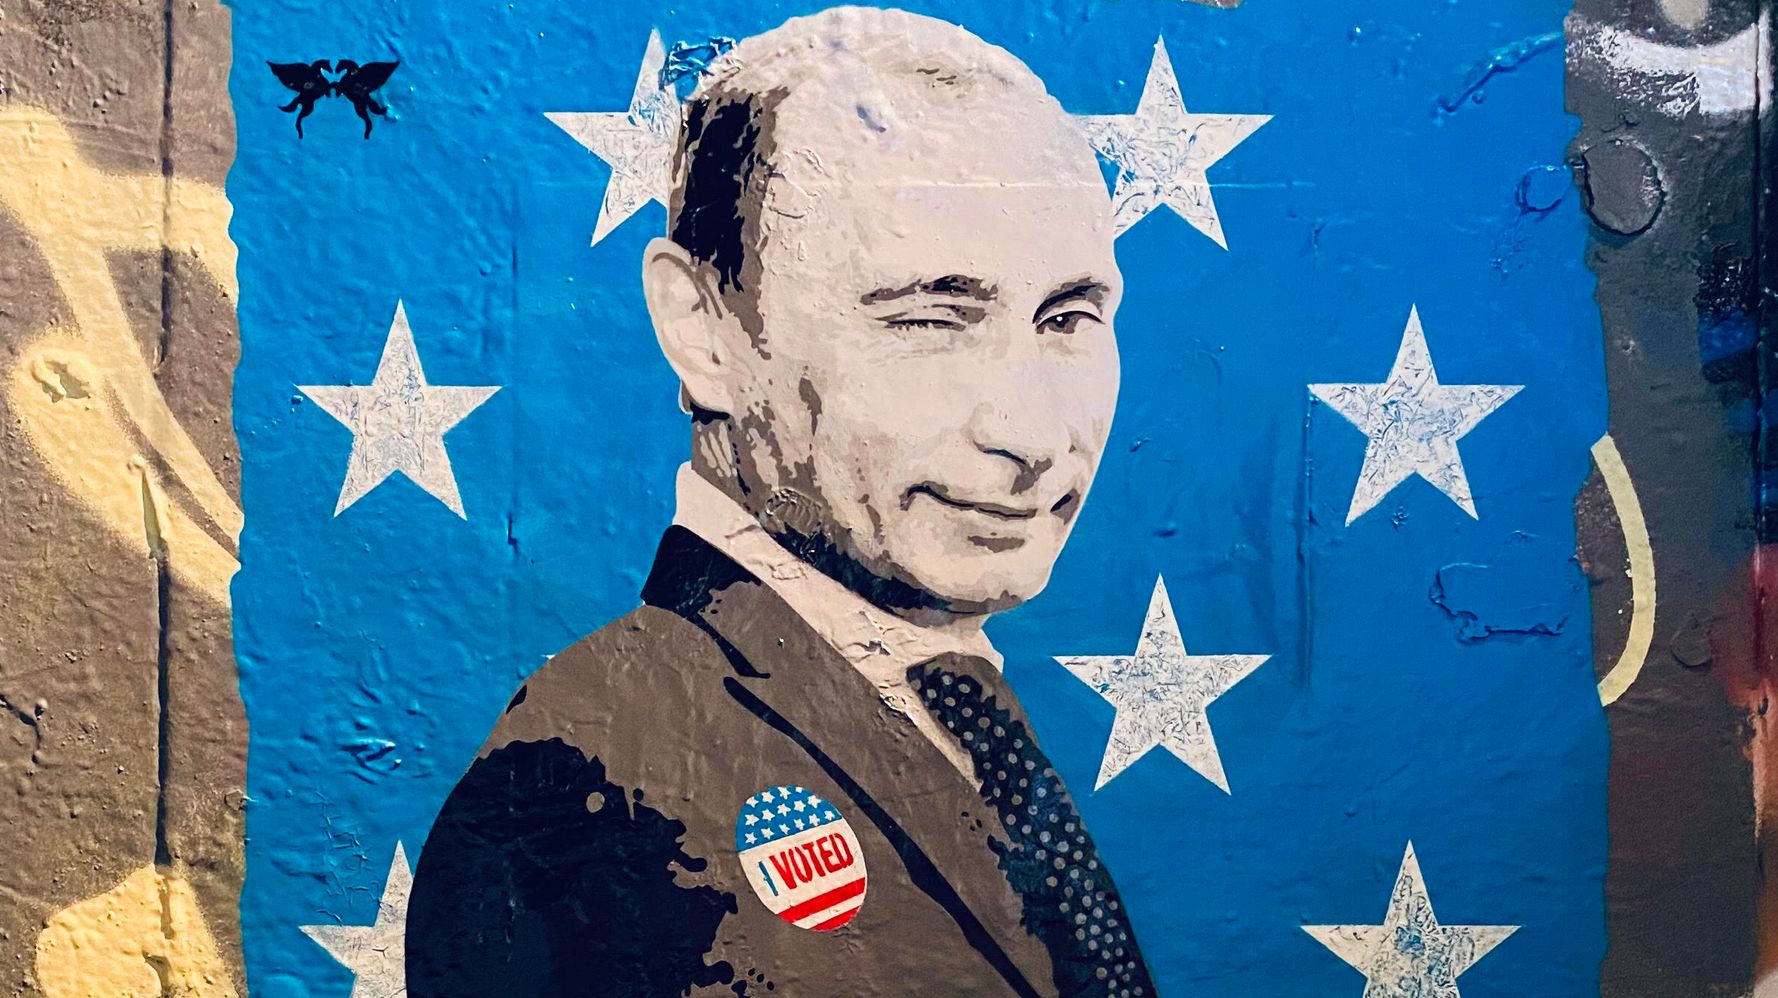 Winking Putin Gets 'I Voted' Sticker In Election Day Street Art